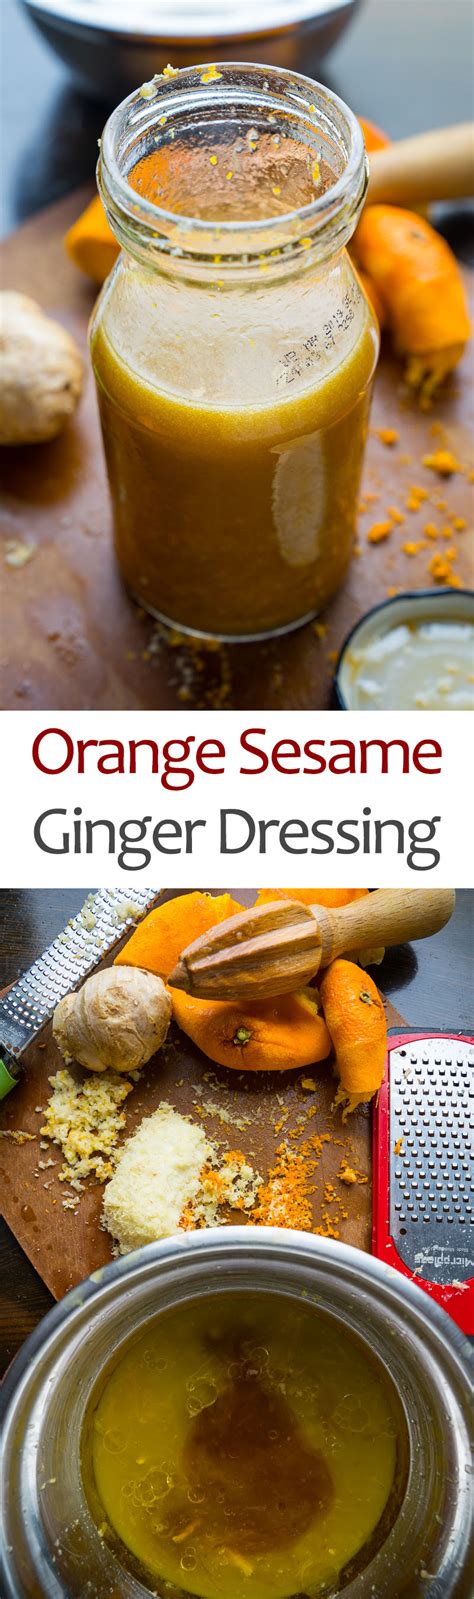 orange-sesame-ginger-dressing-closet-cooking image